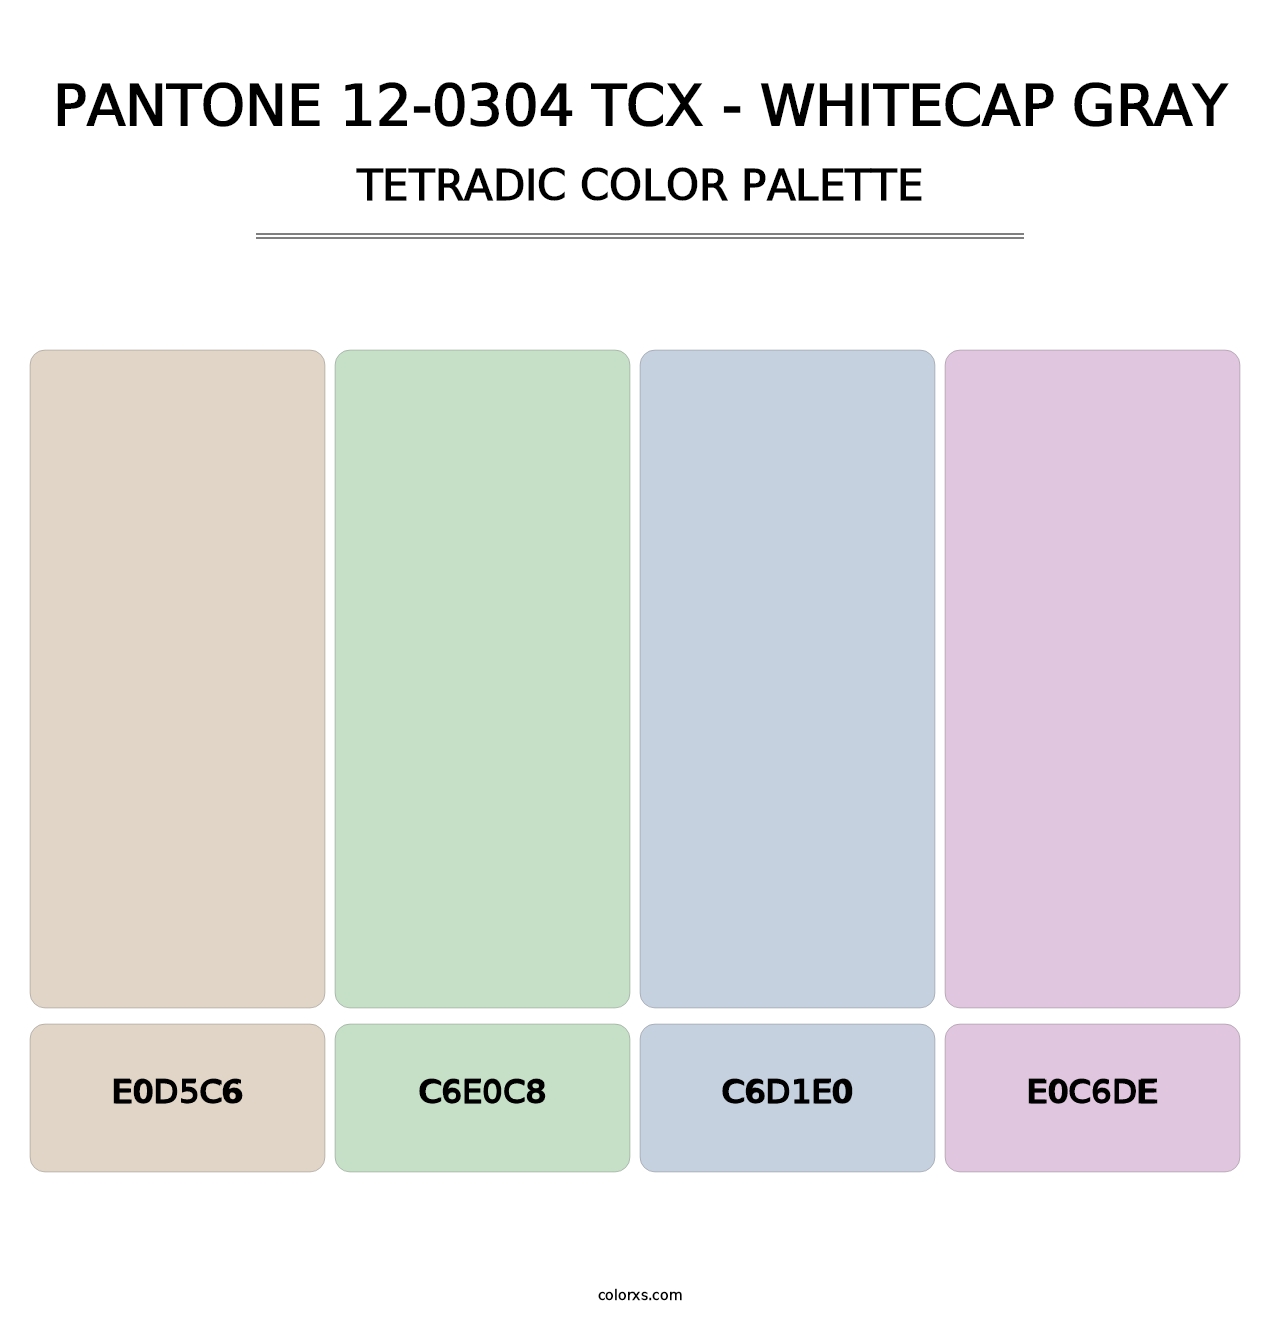 PANTONE 12-0304 TCX - Whitecap Gray - Tetradic Color Palette